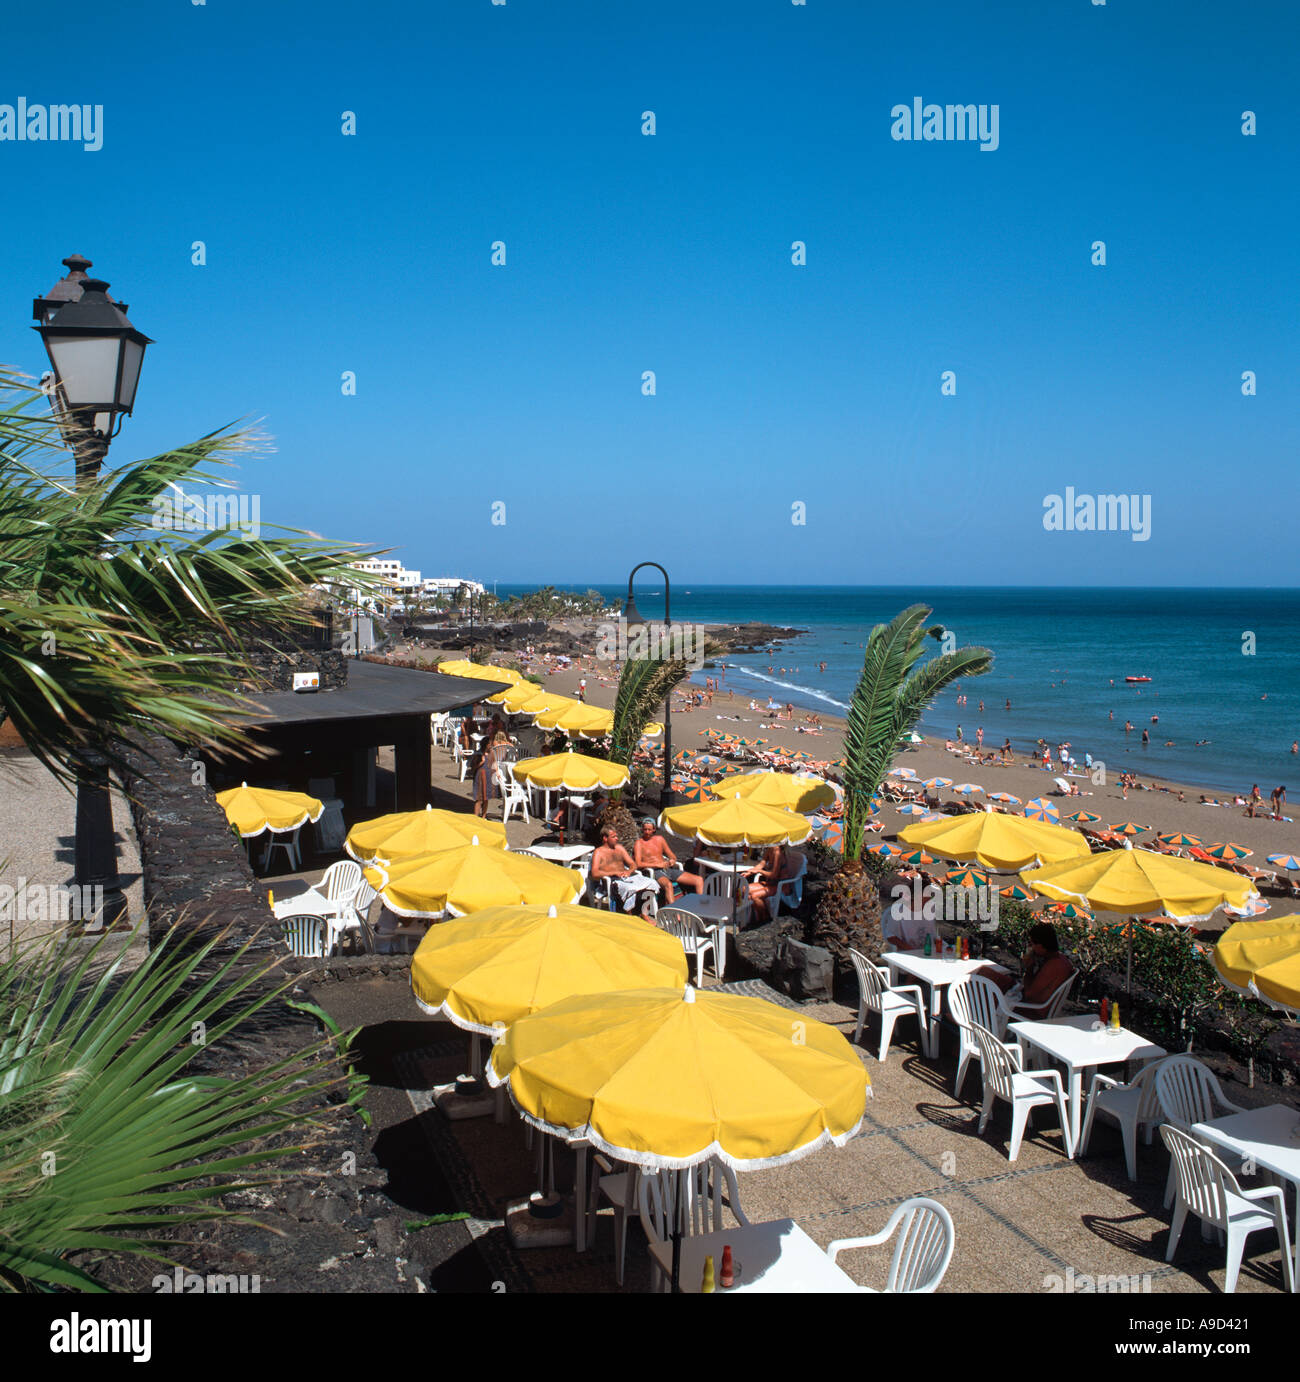 Seafront Cafe, Puerto del Carmen, Lanzarote, Canary Islands, Spain Stock Photo